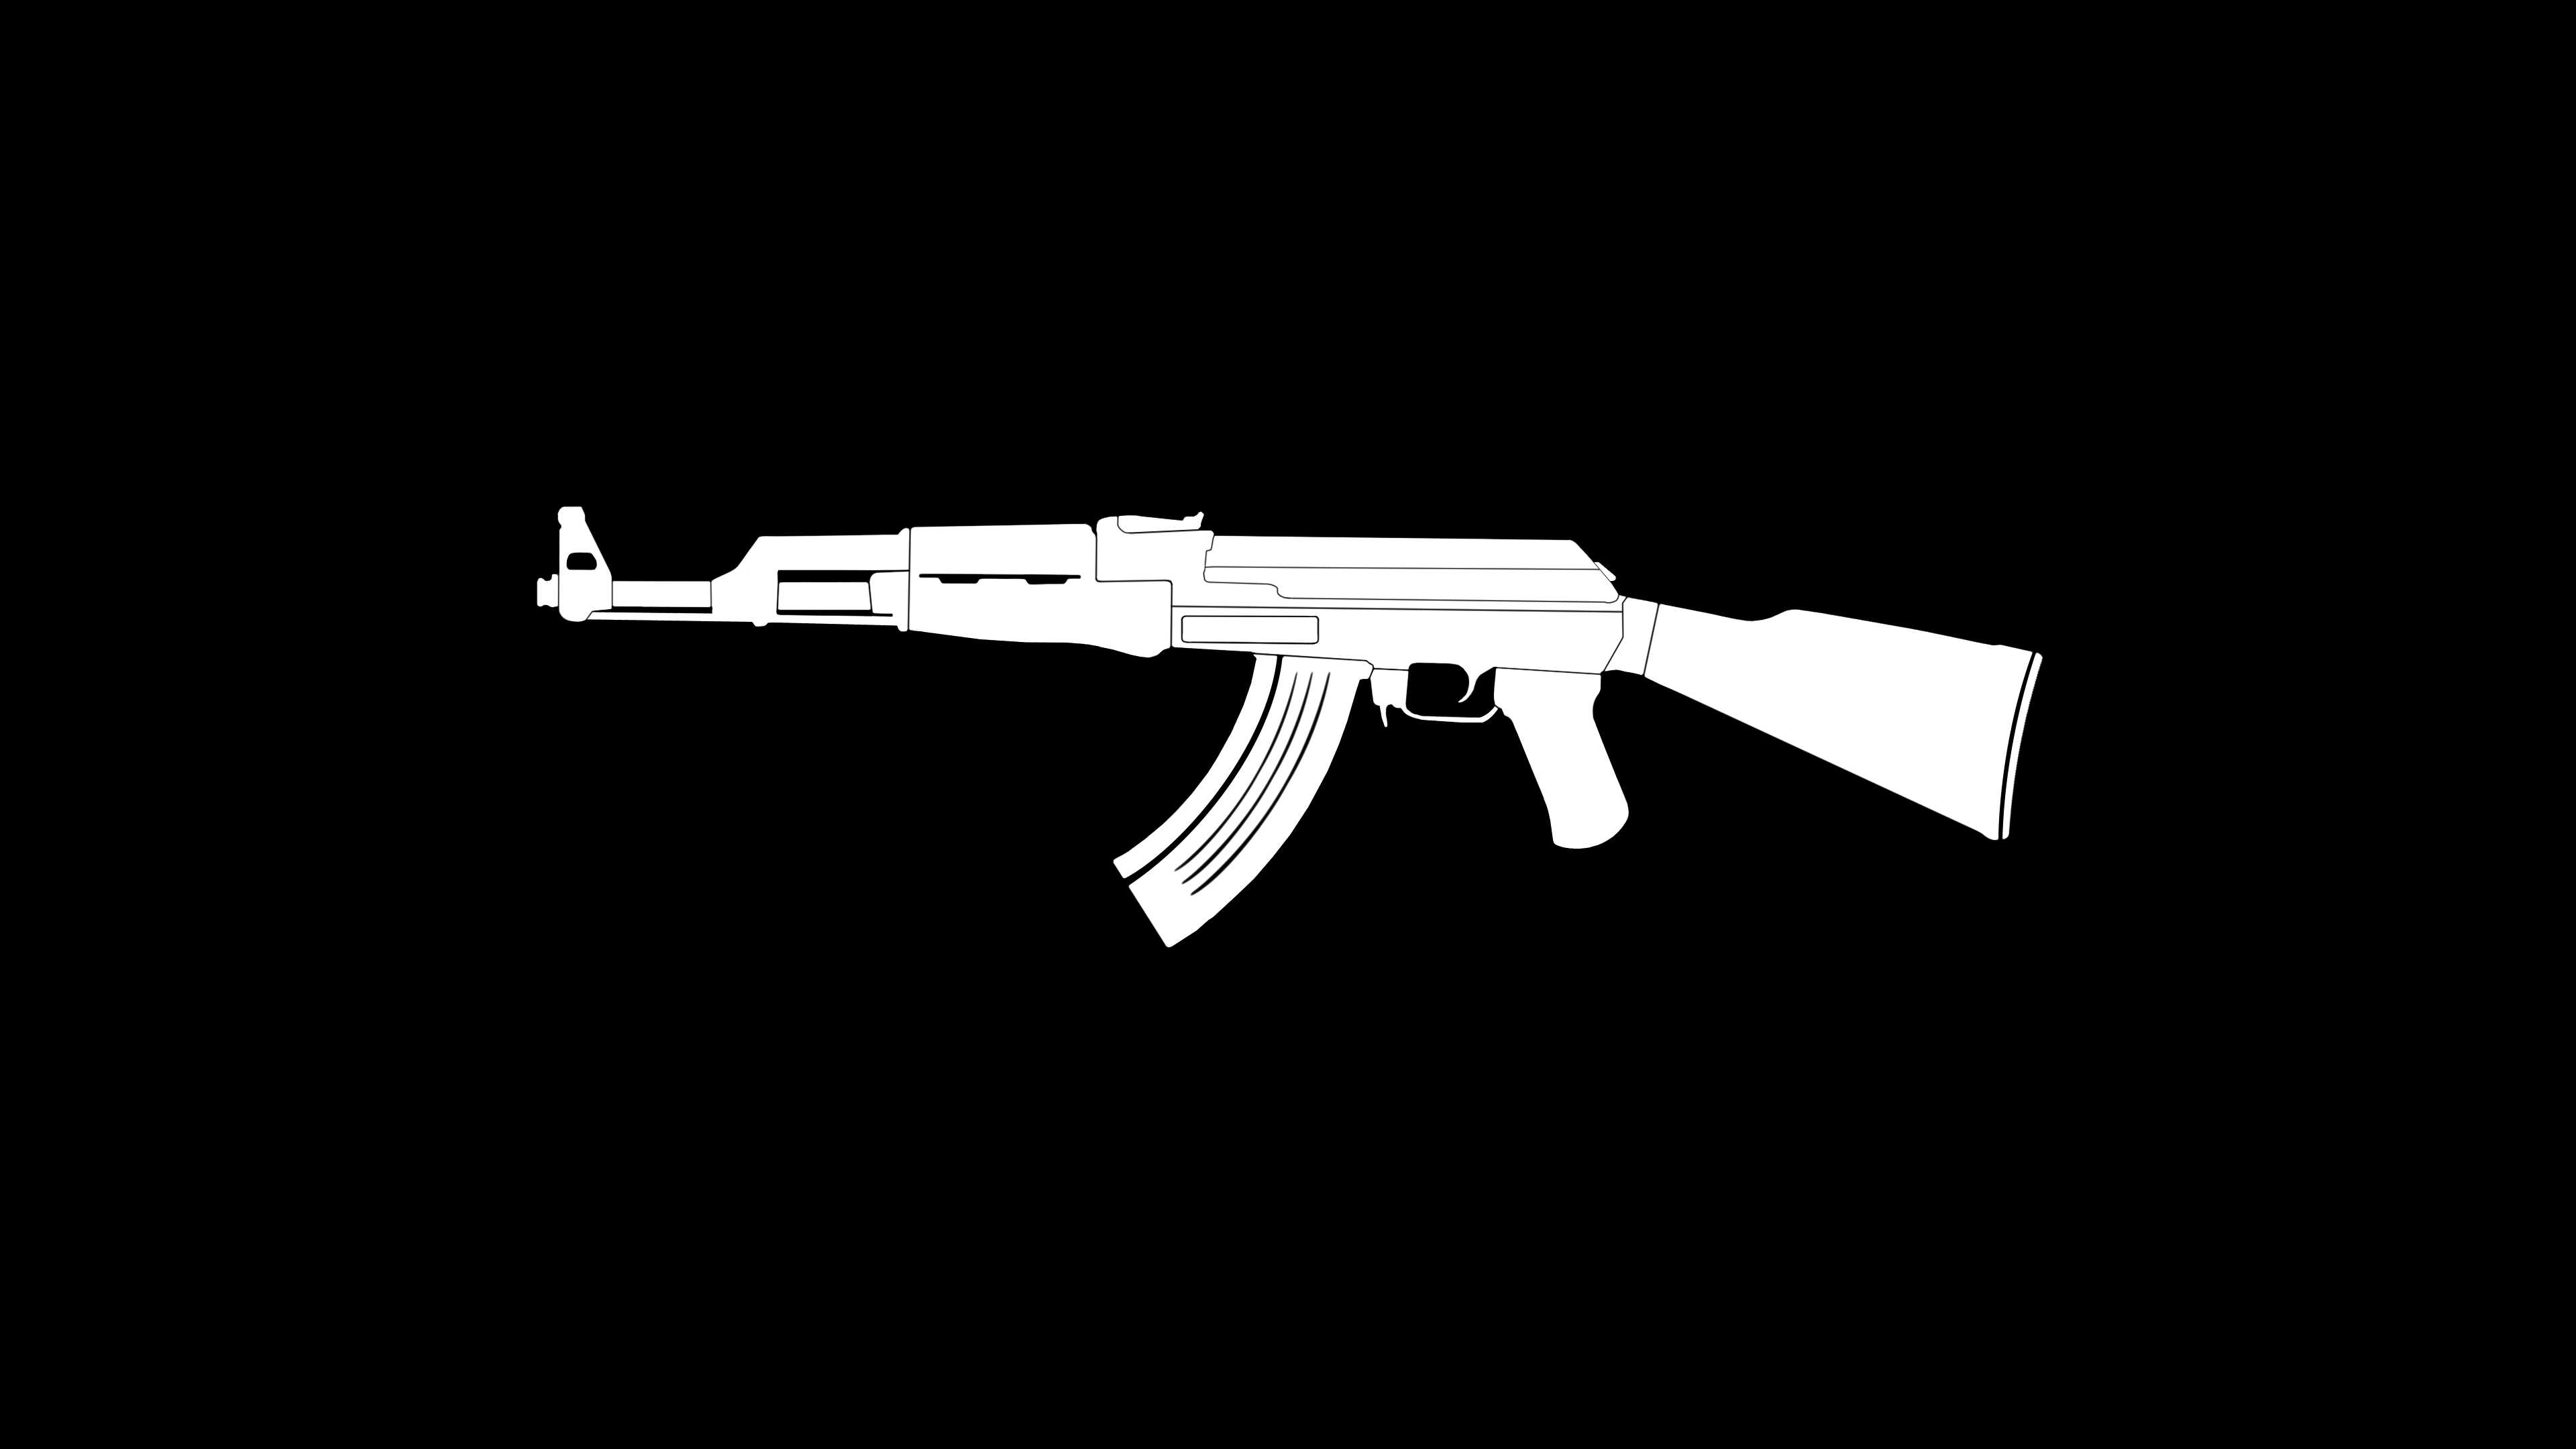 General 3840x2160 weapon minimalism artwork black background simple background AK-47 assault rifle Russian/Soviet firearms